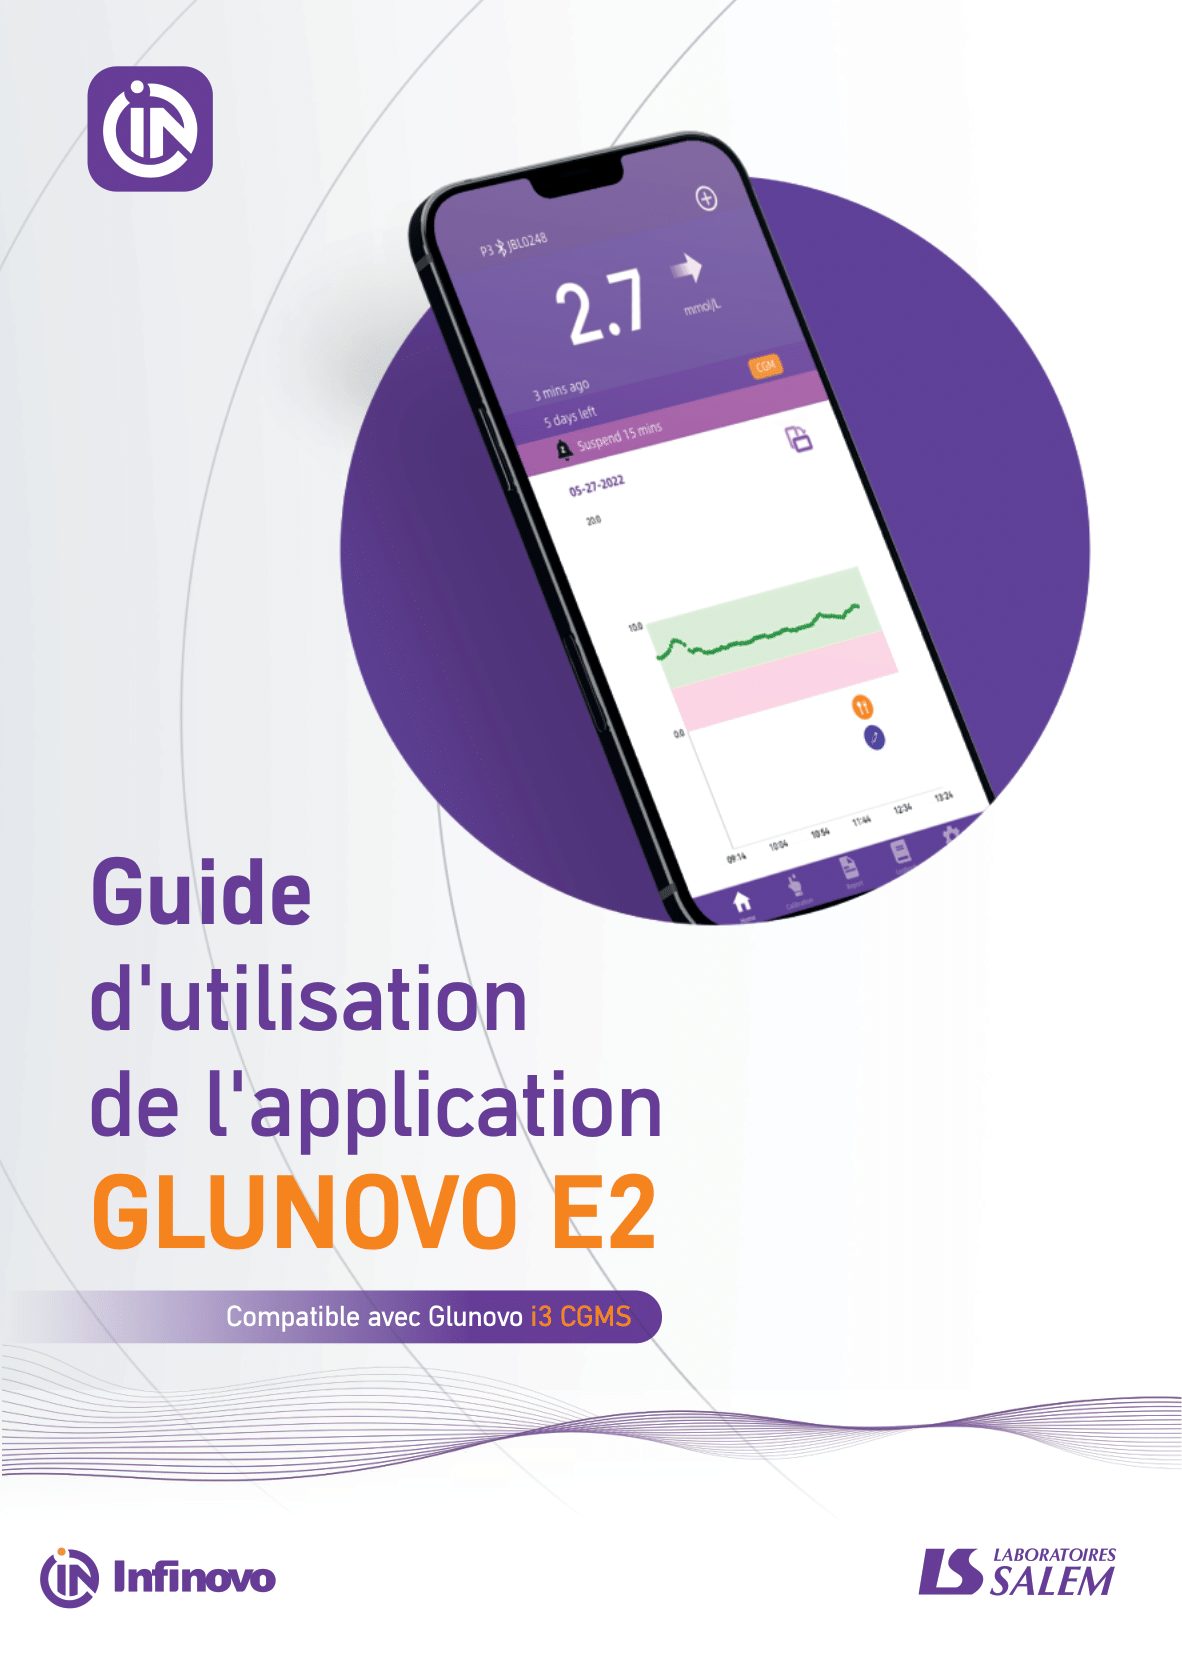 Guide d’utilisation de l’application GLUNOVO E2